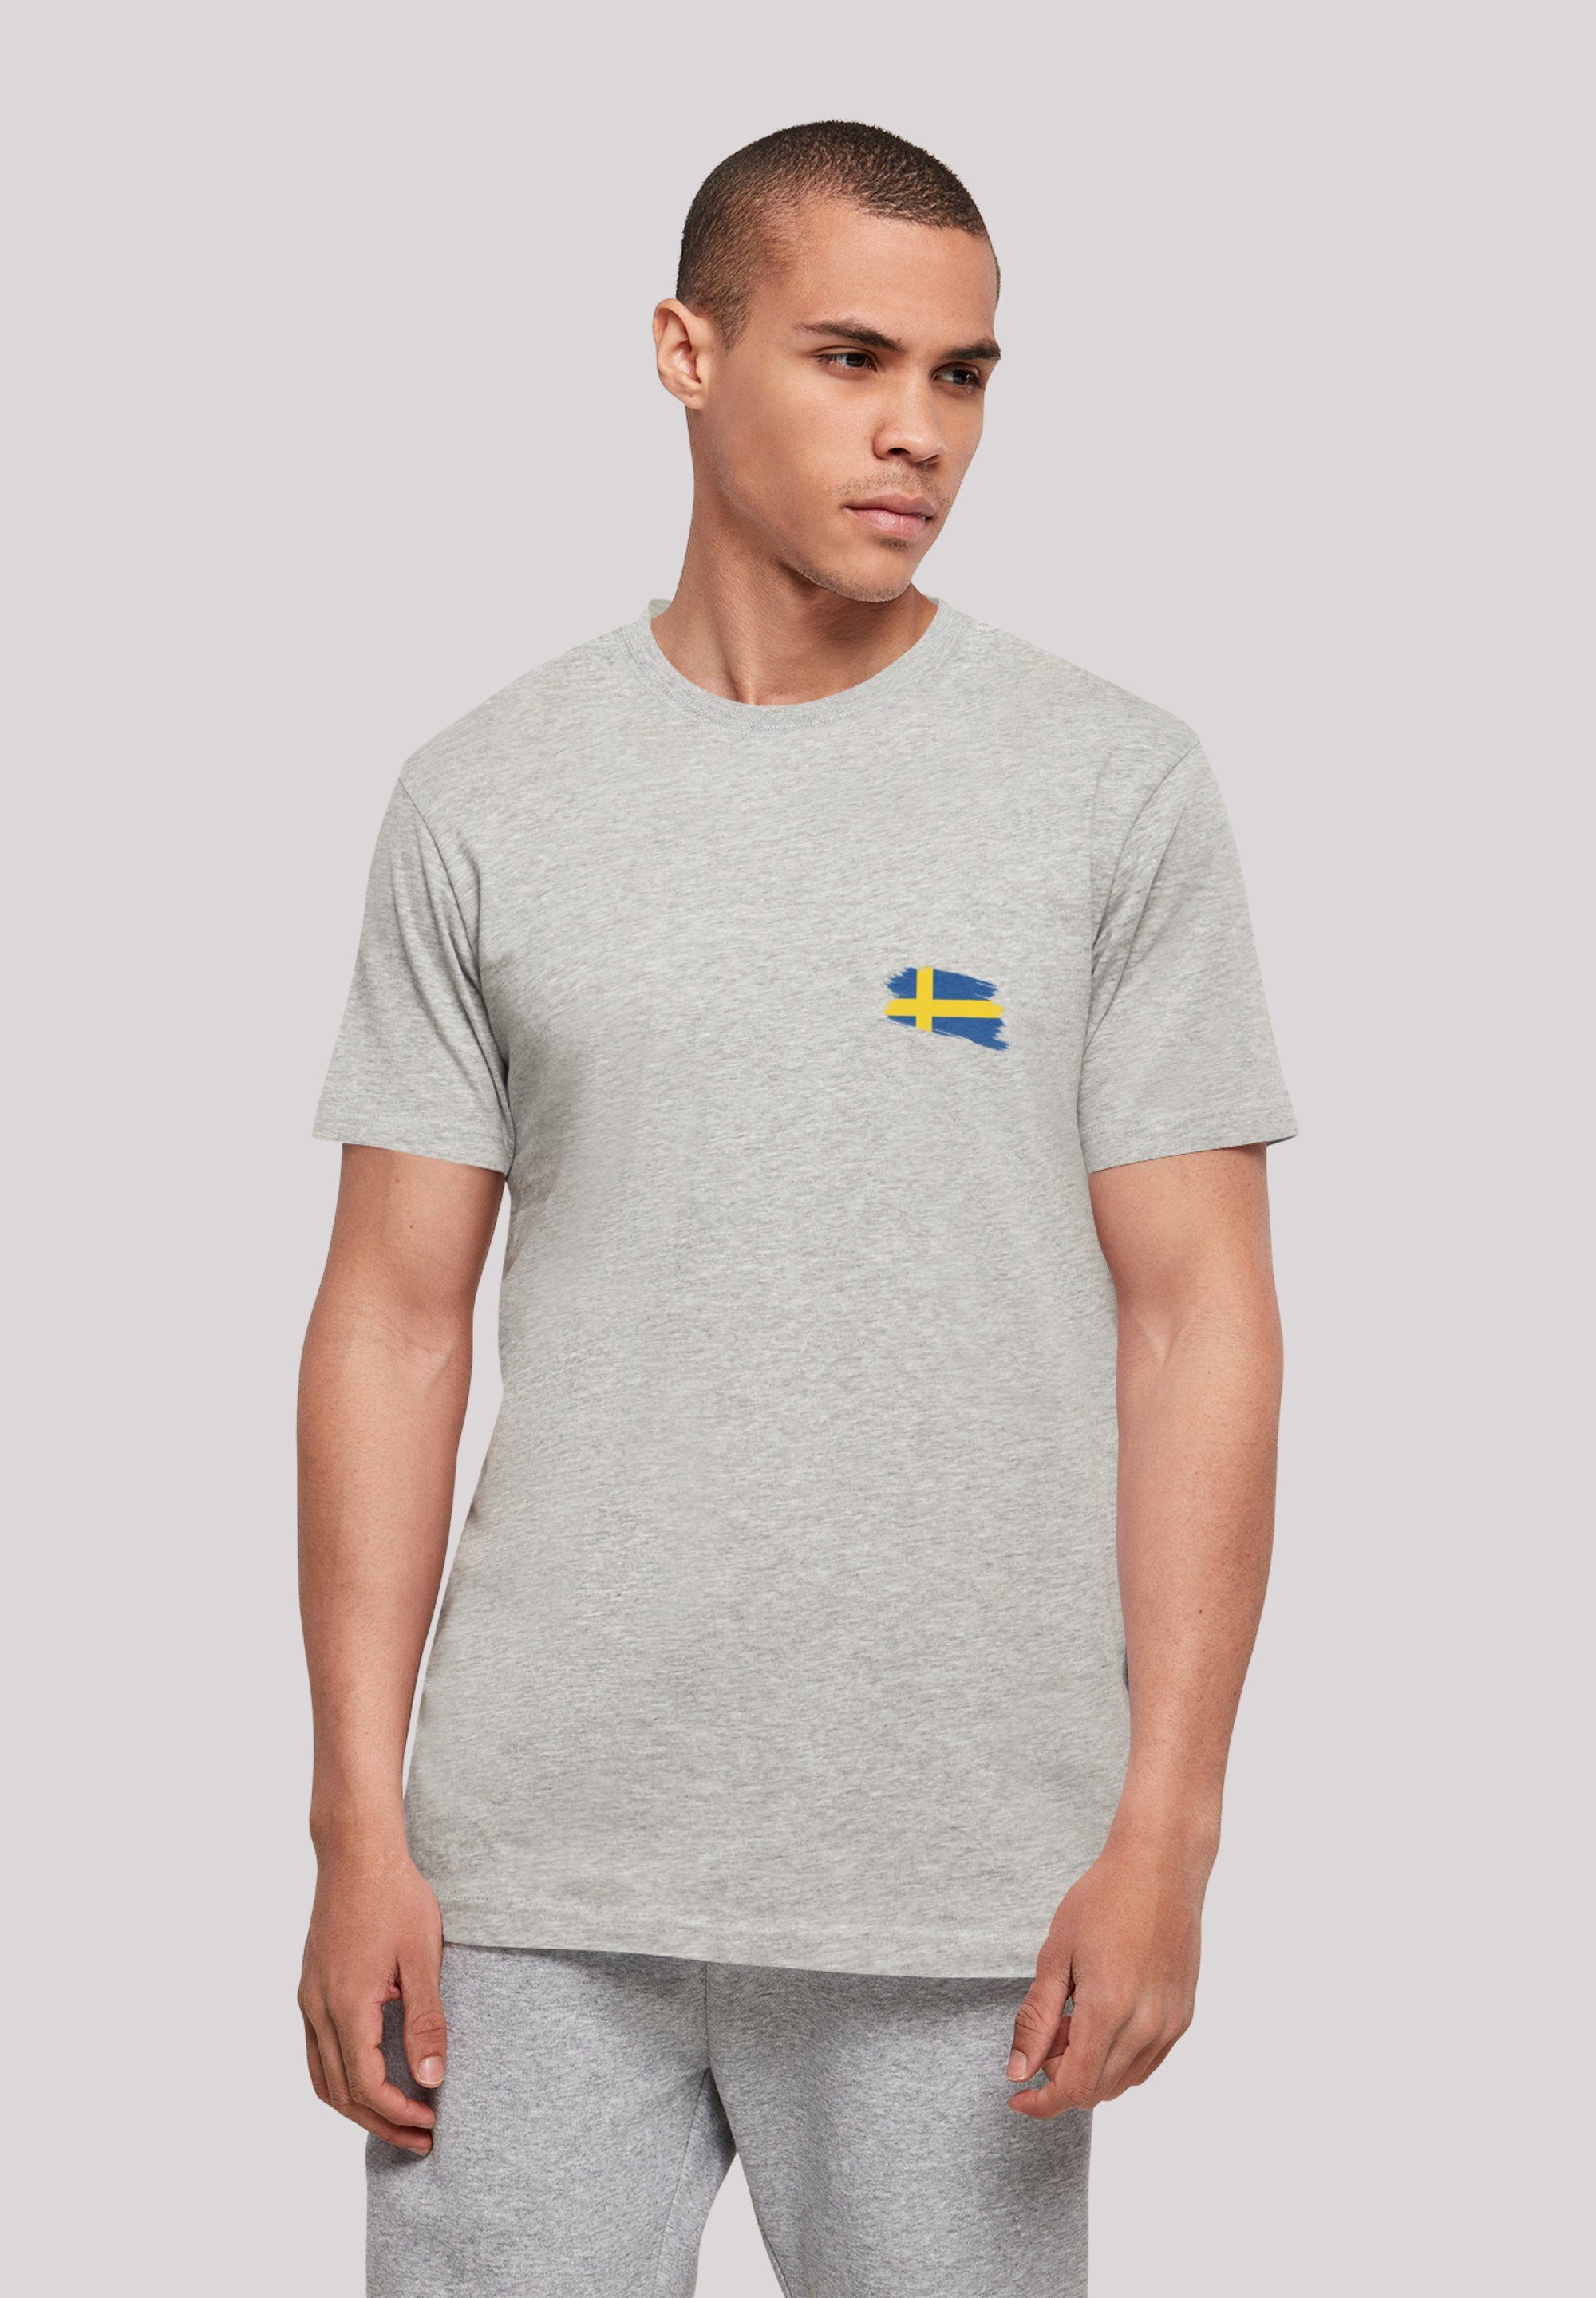 F4NT4STIC Schweden T-Shirt grey Print Flagge heather Sweden